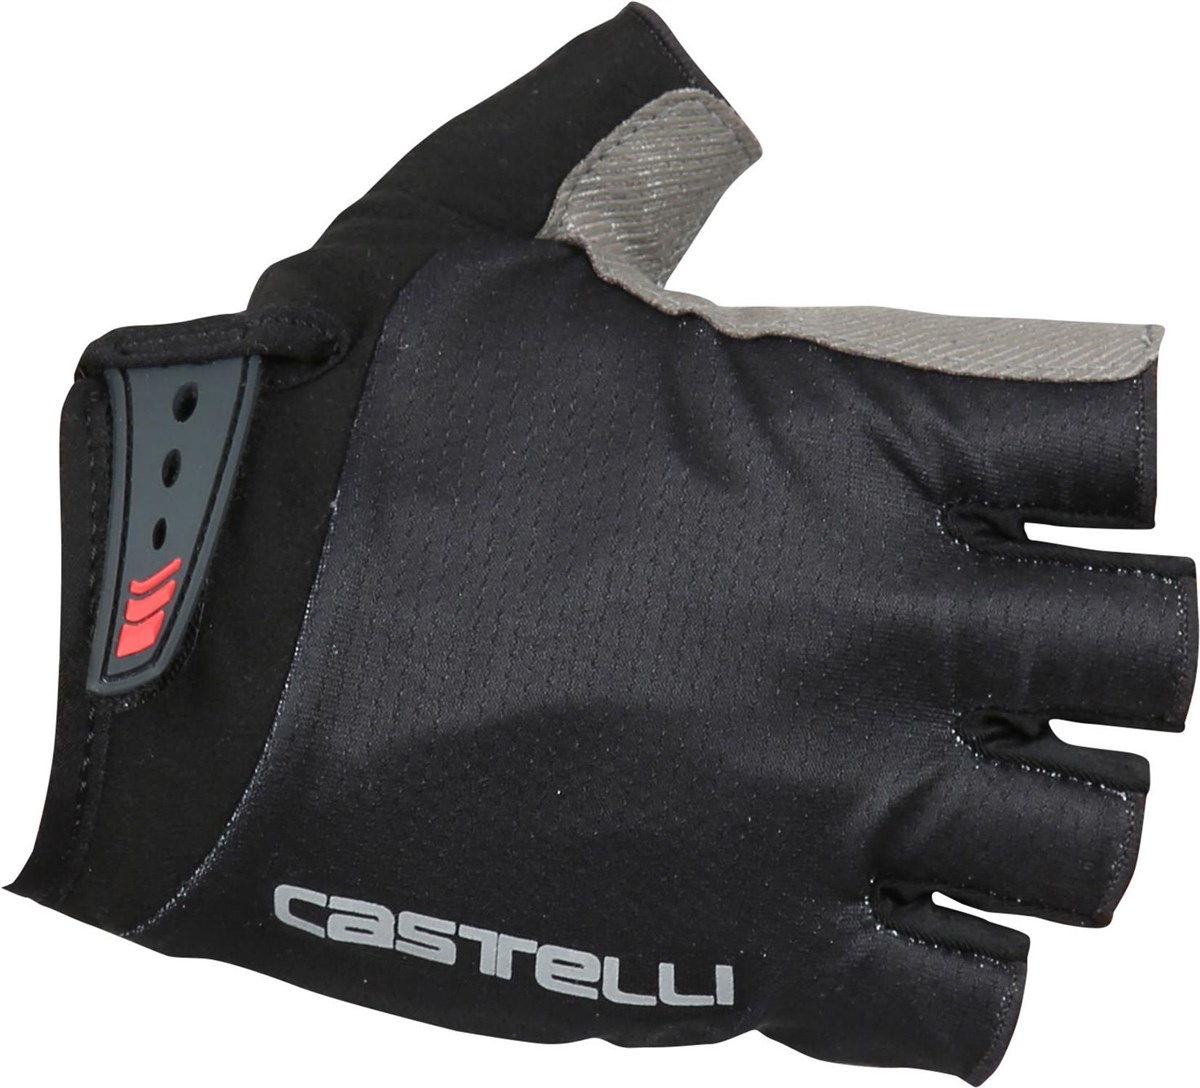 Castelli Entrata Short Finger Glove product image